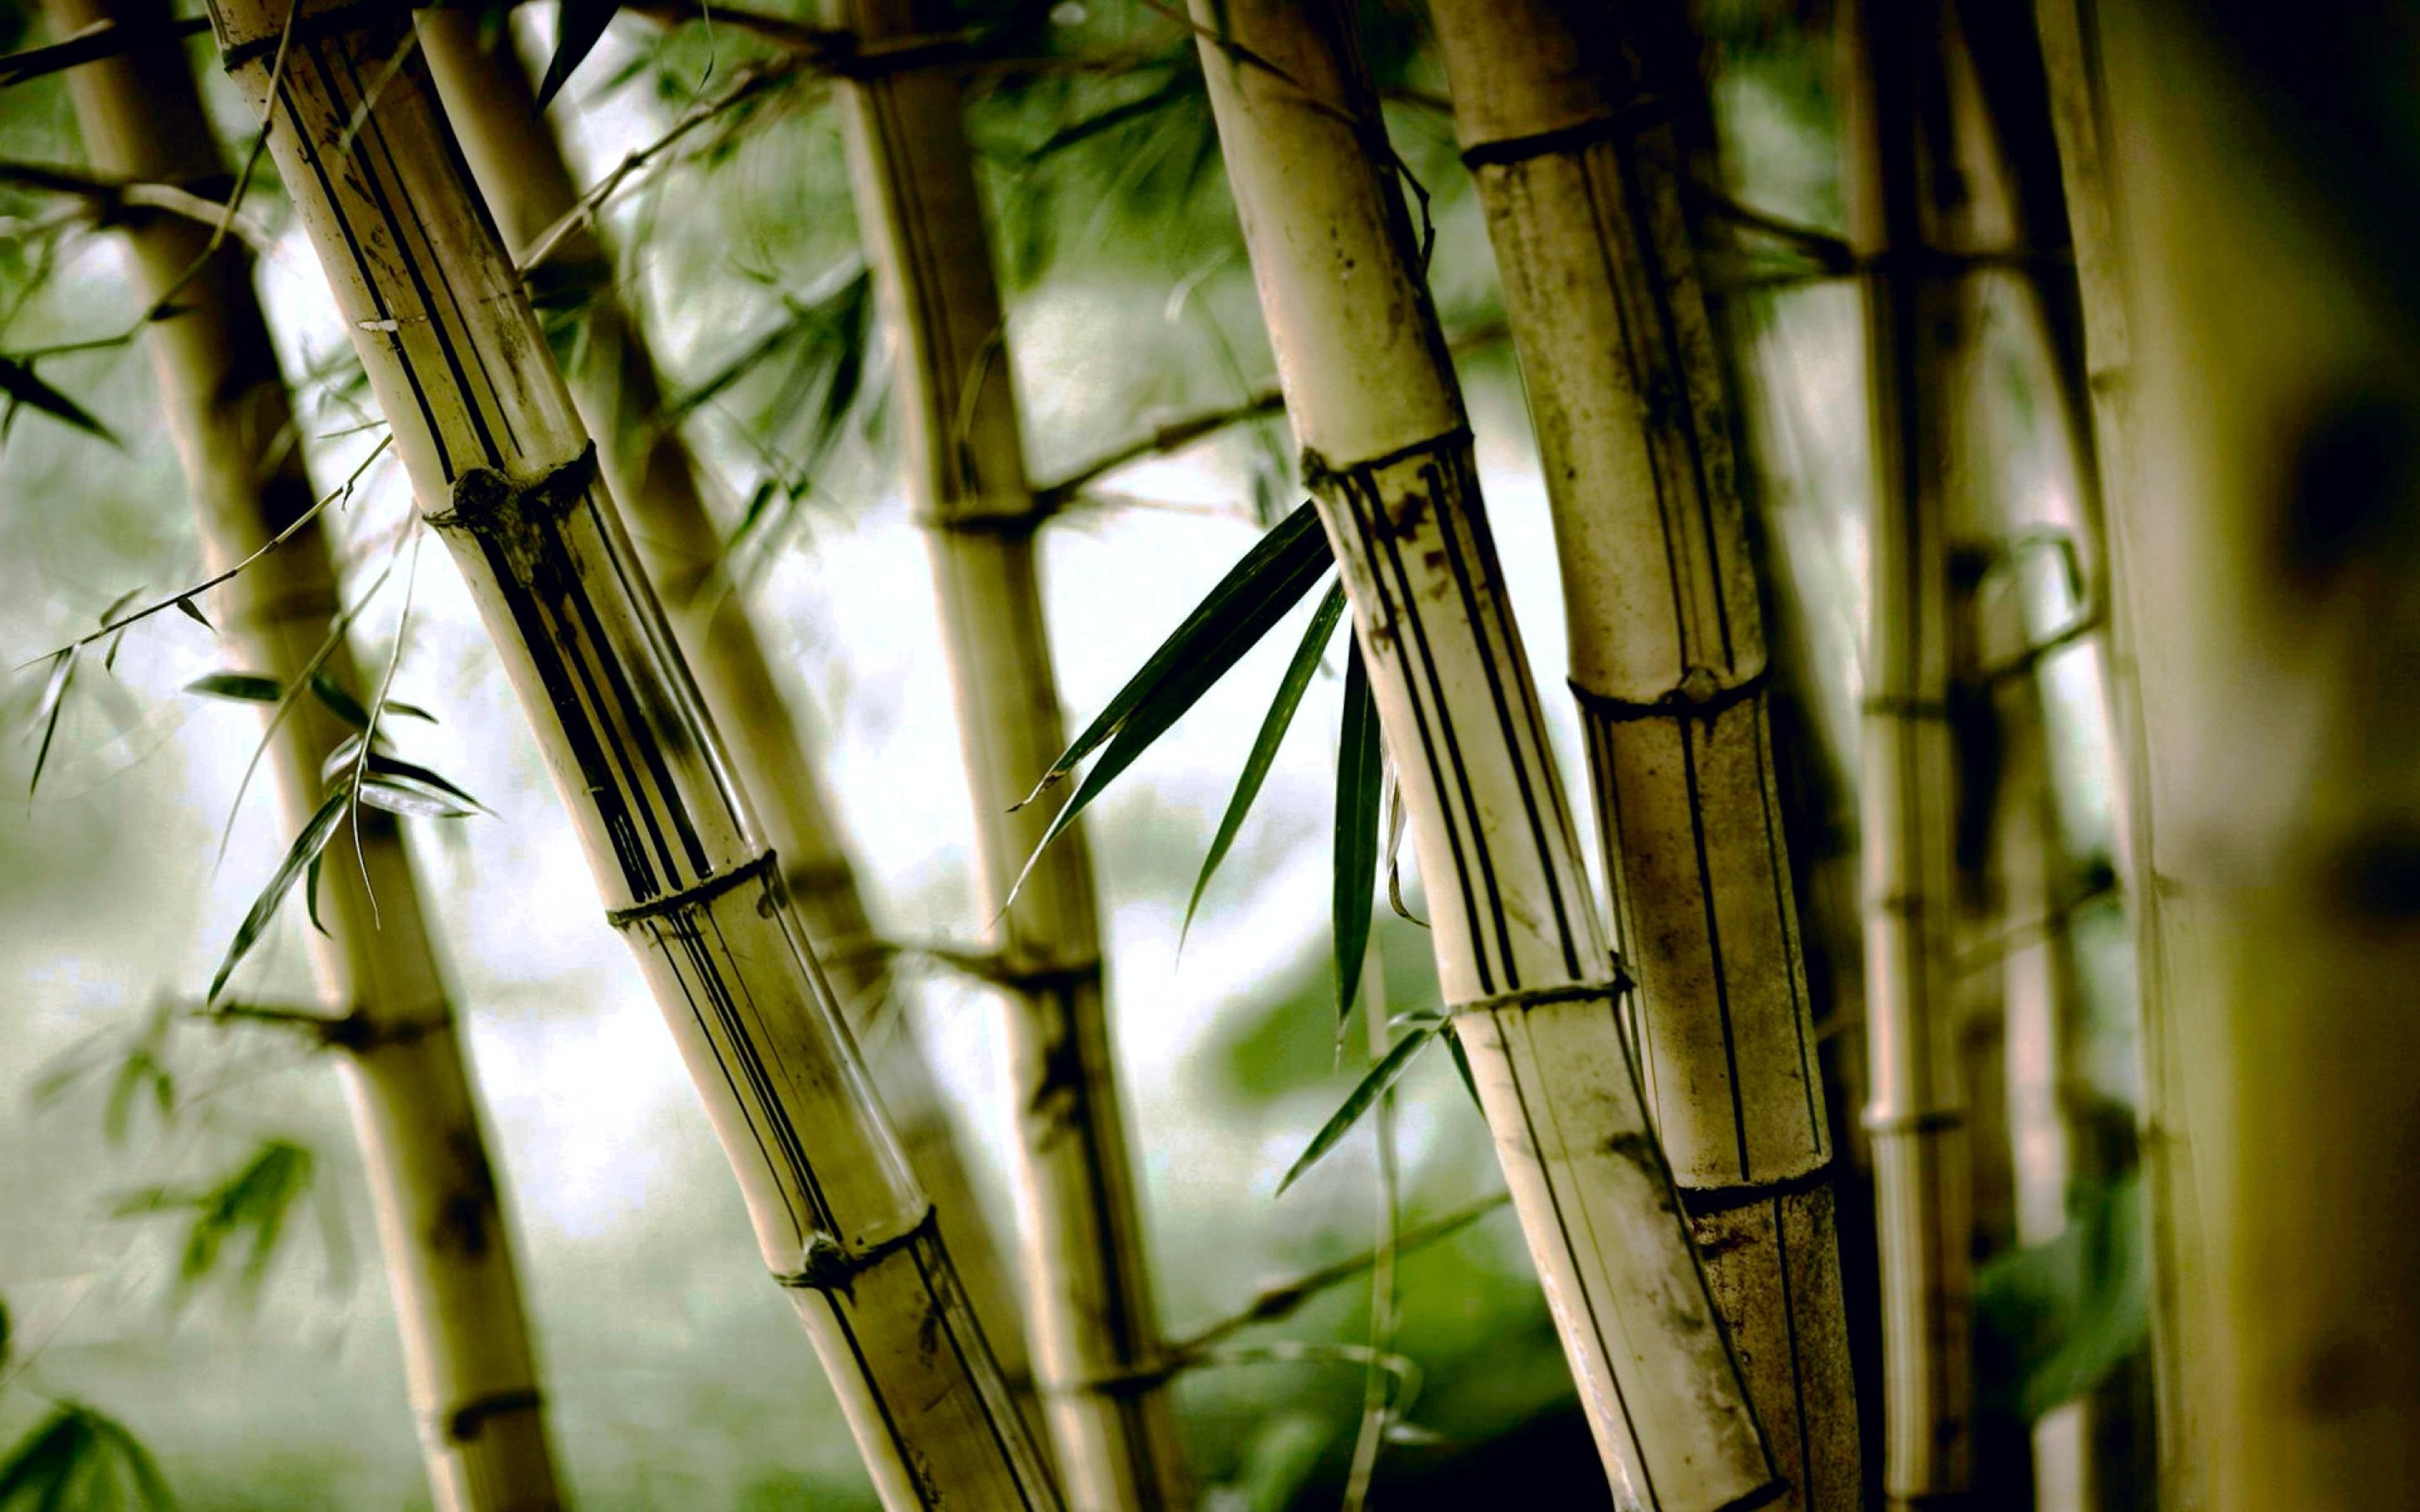 Bamboo in nature, Serene wallpapers, Calming backgrounds, Peaceful scenery, 2960x1850 HD Desktop